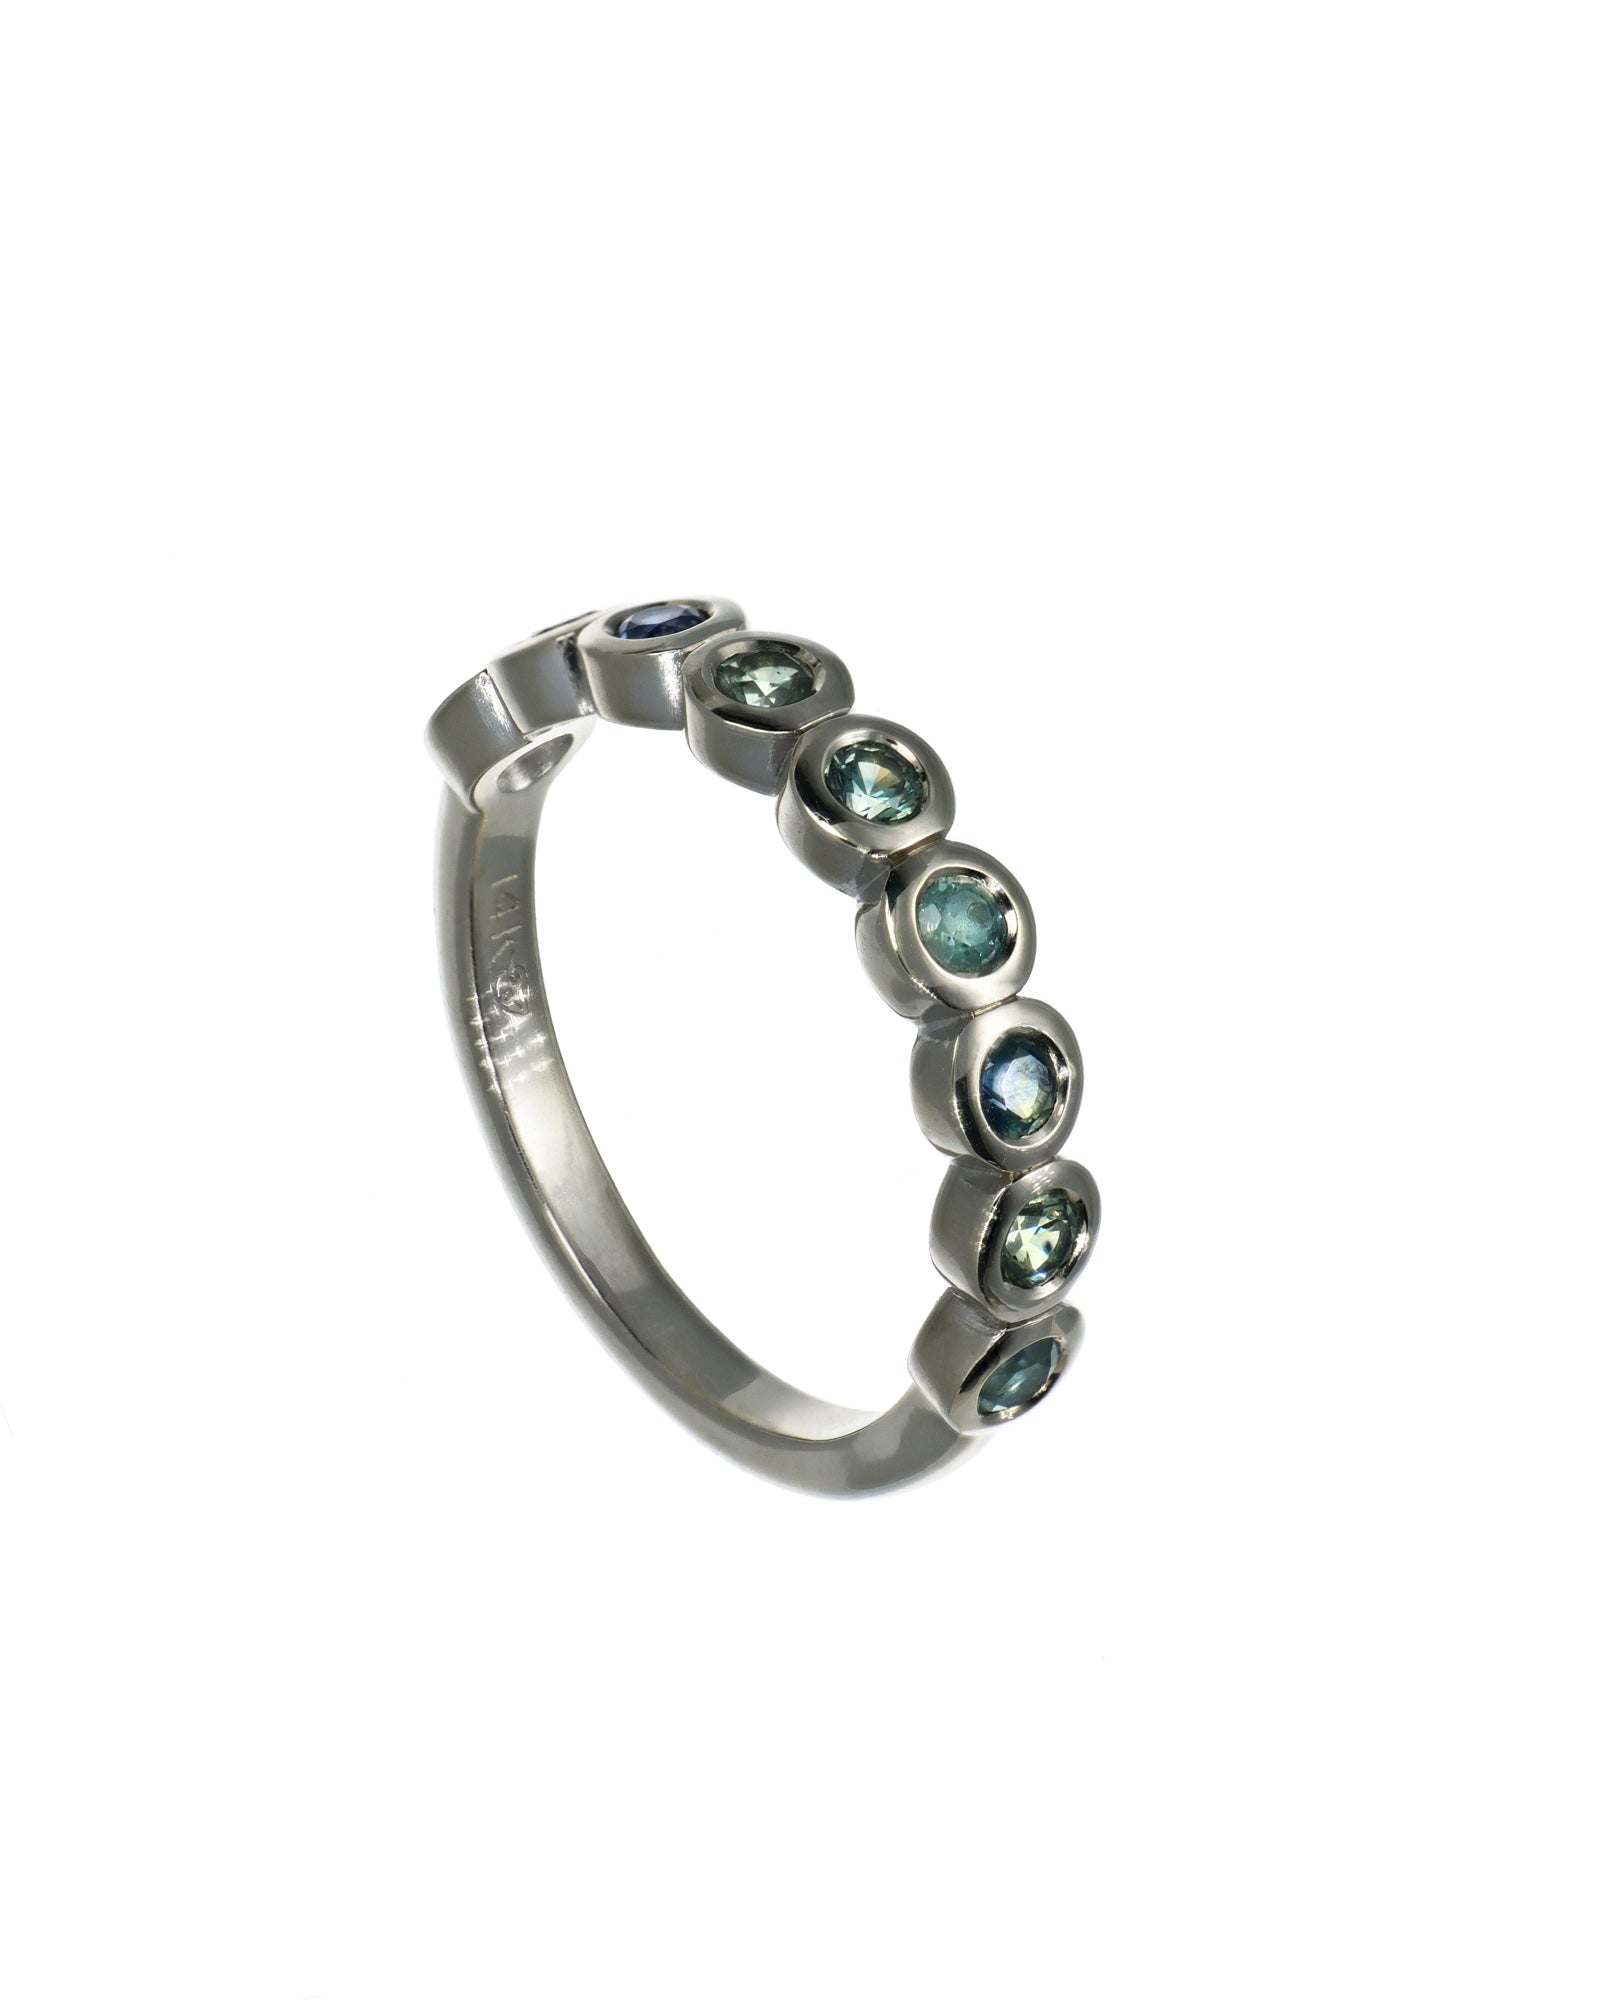 Bezel Set Sapphire Ring